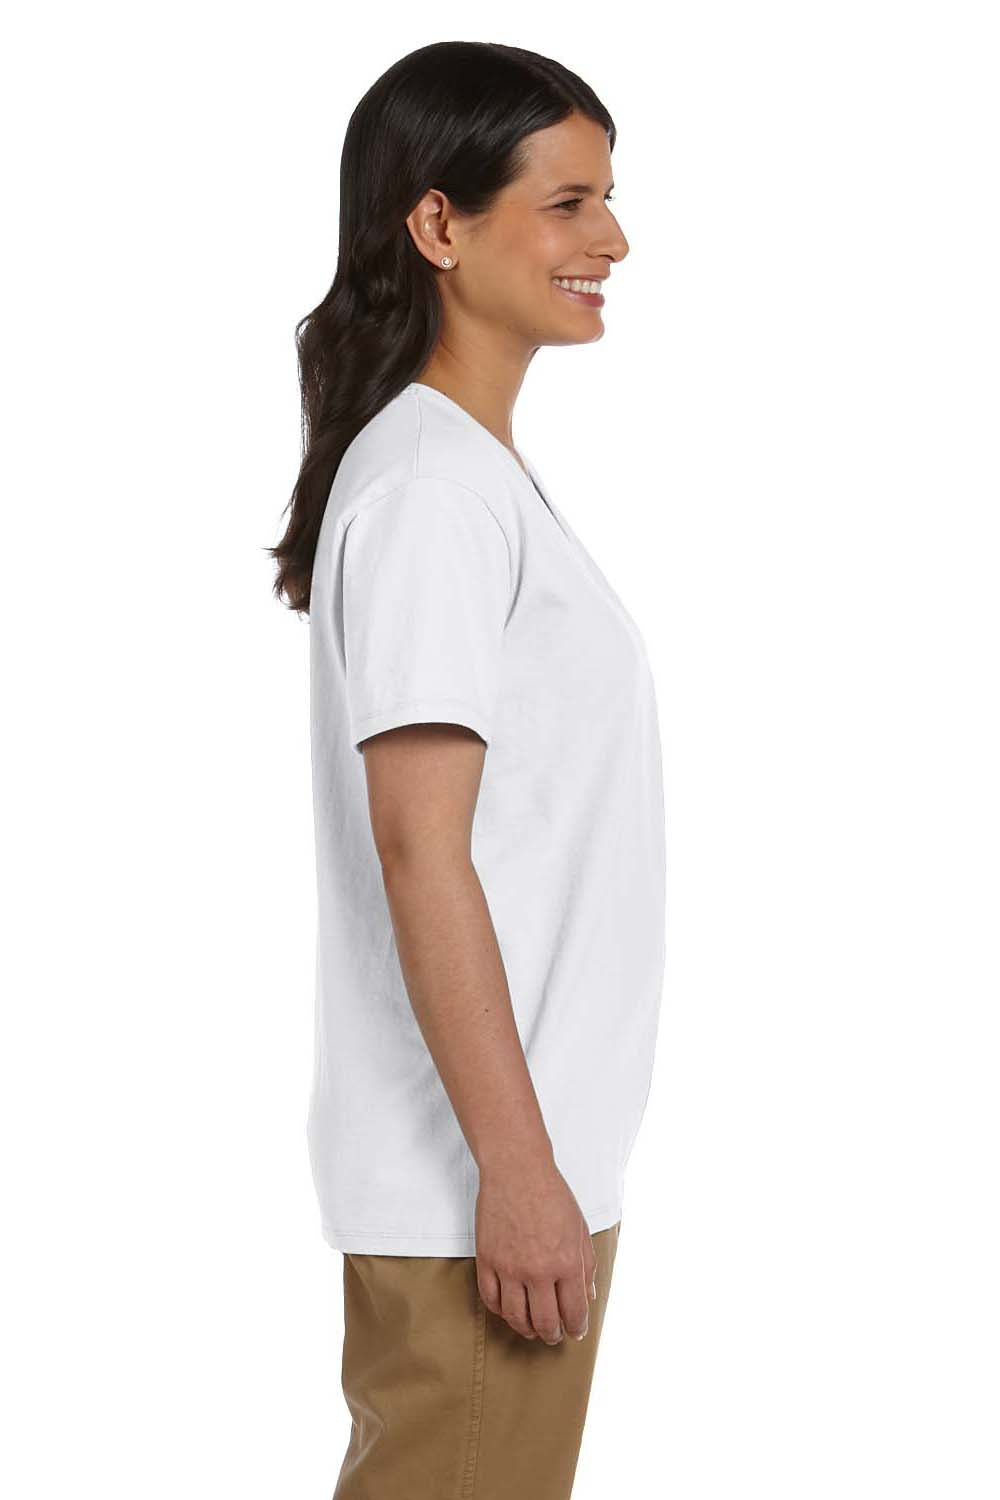 Hanes 5780 Womens ComfortSoft Short Sleeve V-Neck T-Shirt White Side